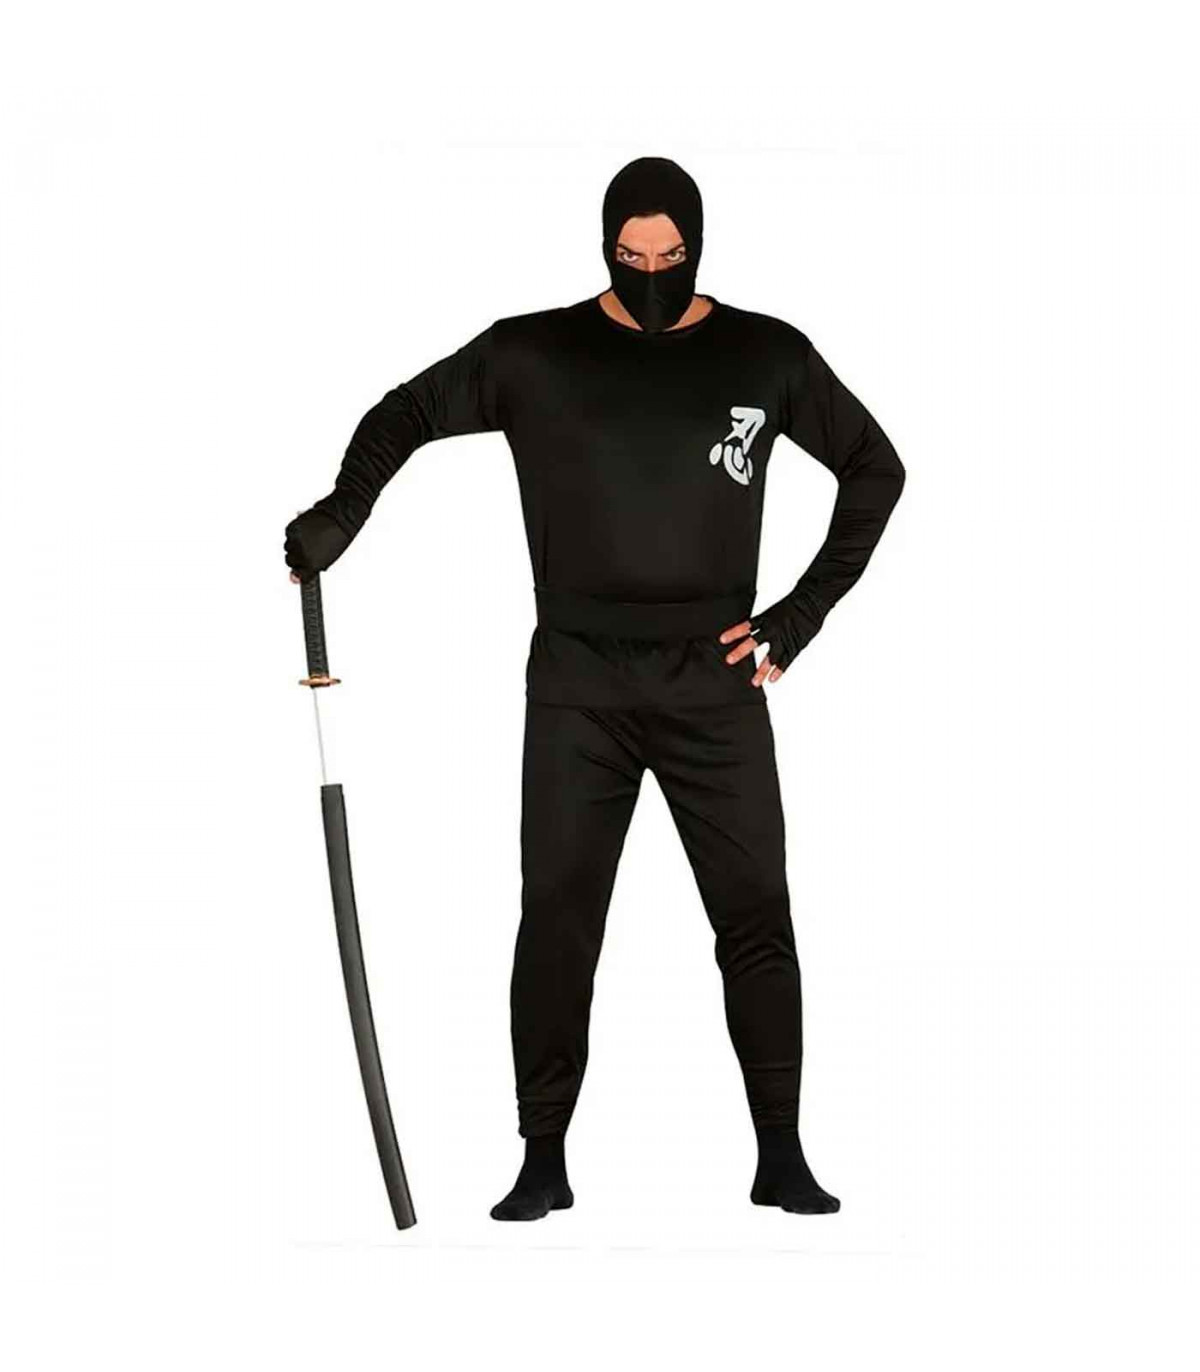 Disfraz de Ninja para Hombre